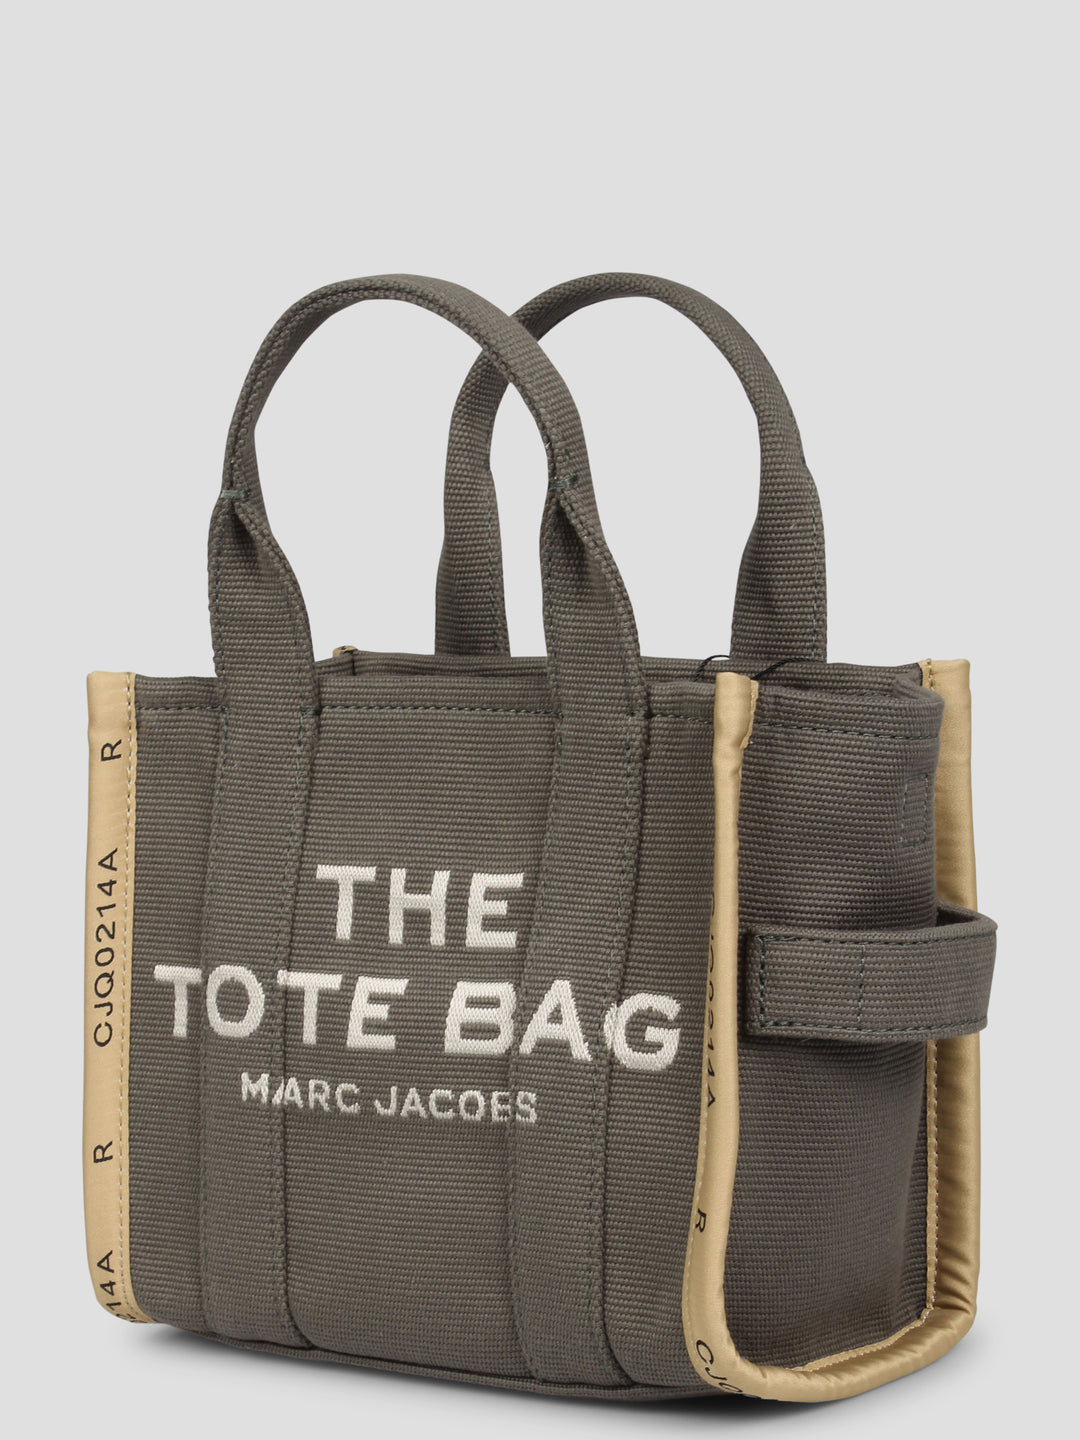 The jacquard small tote bag